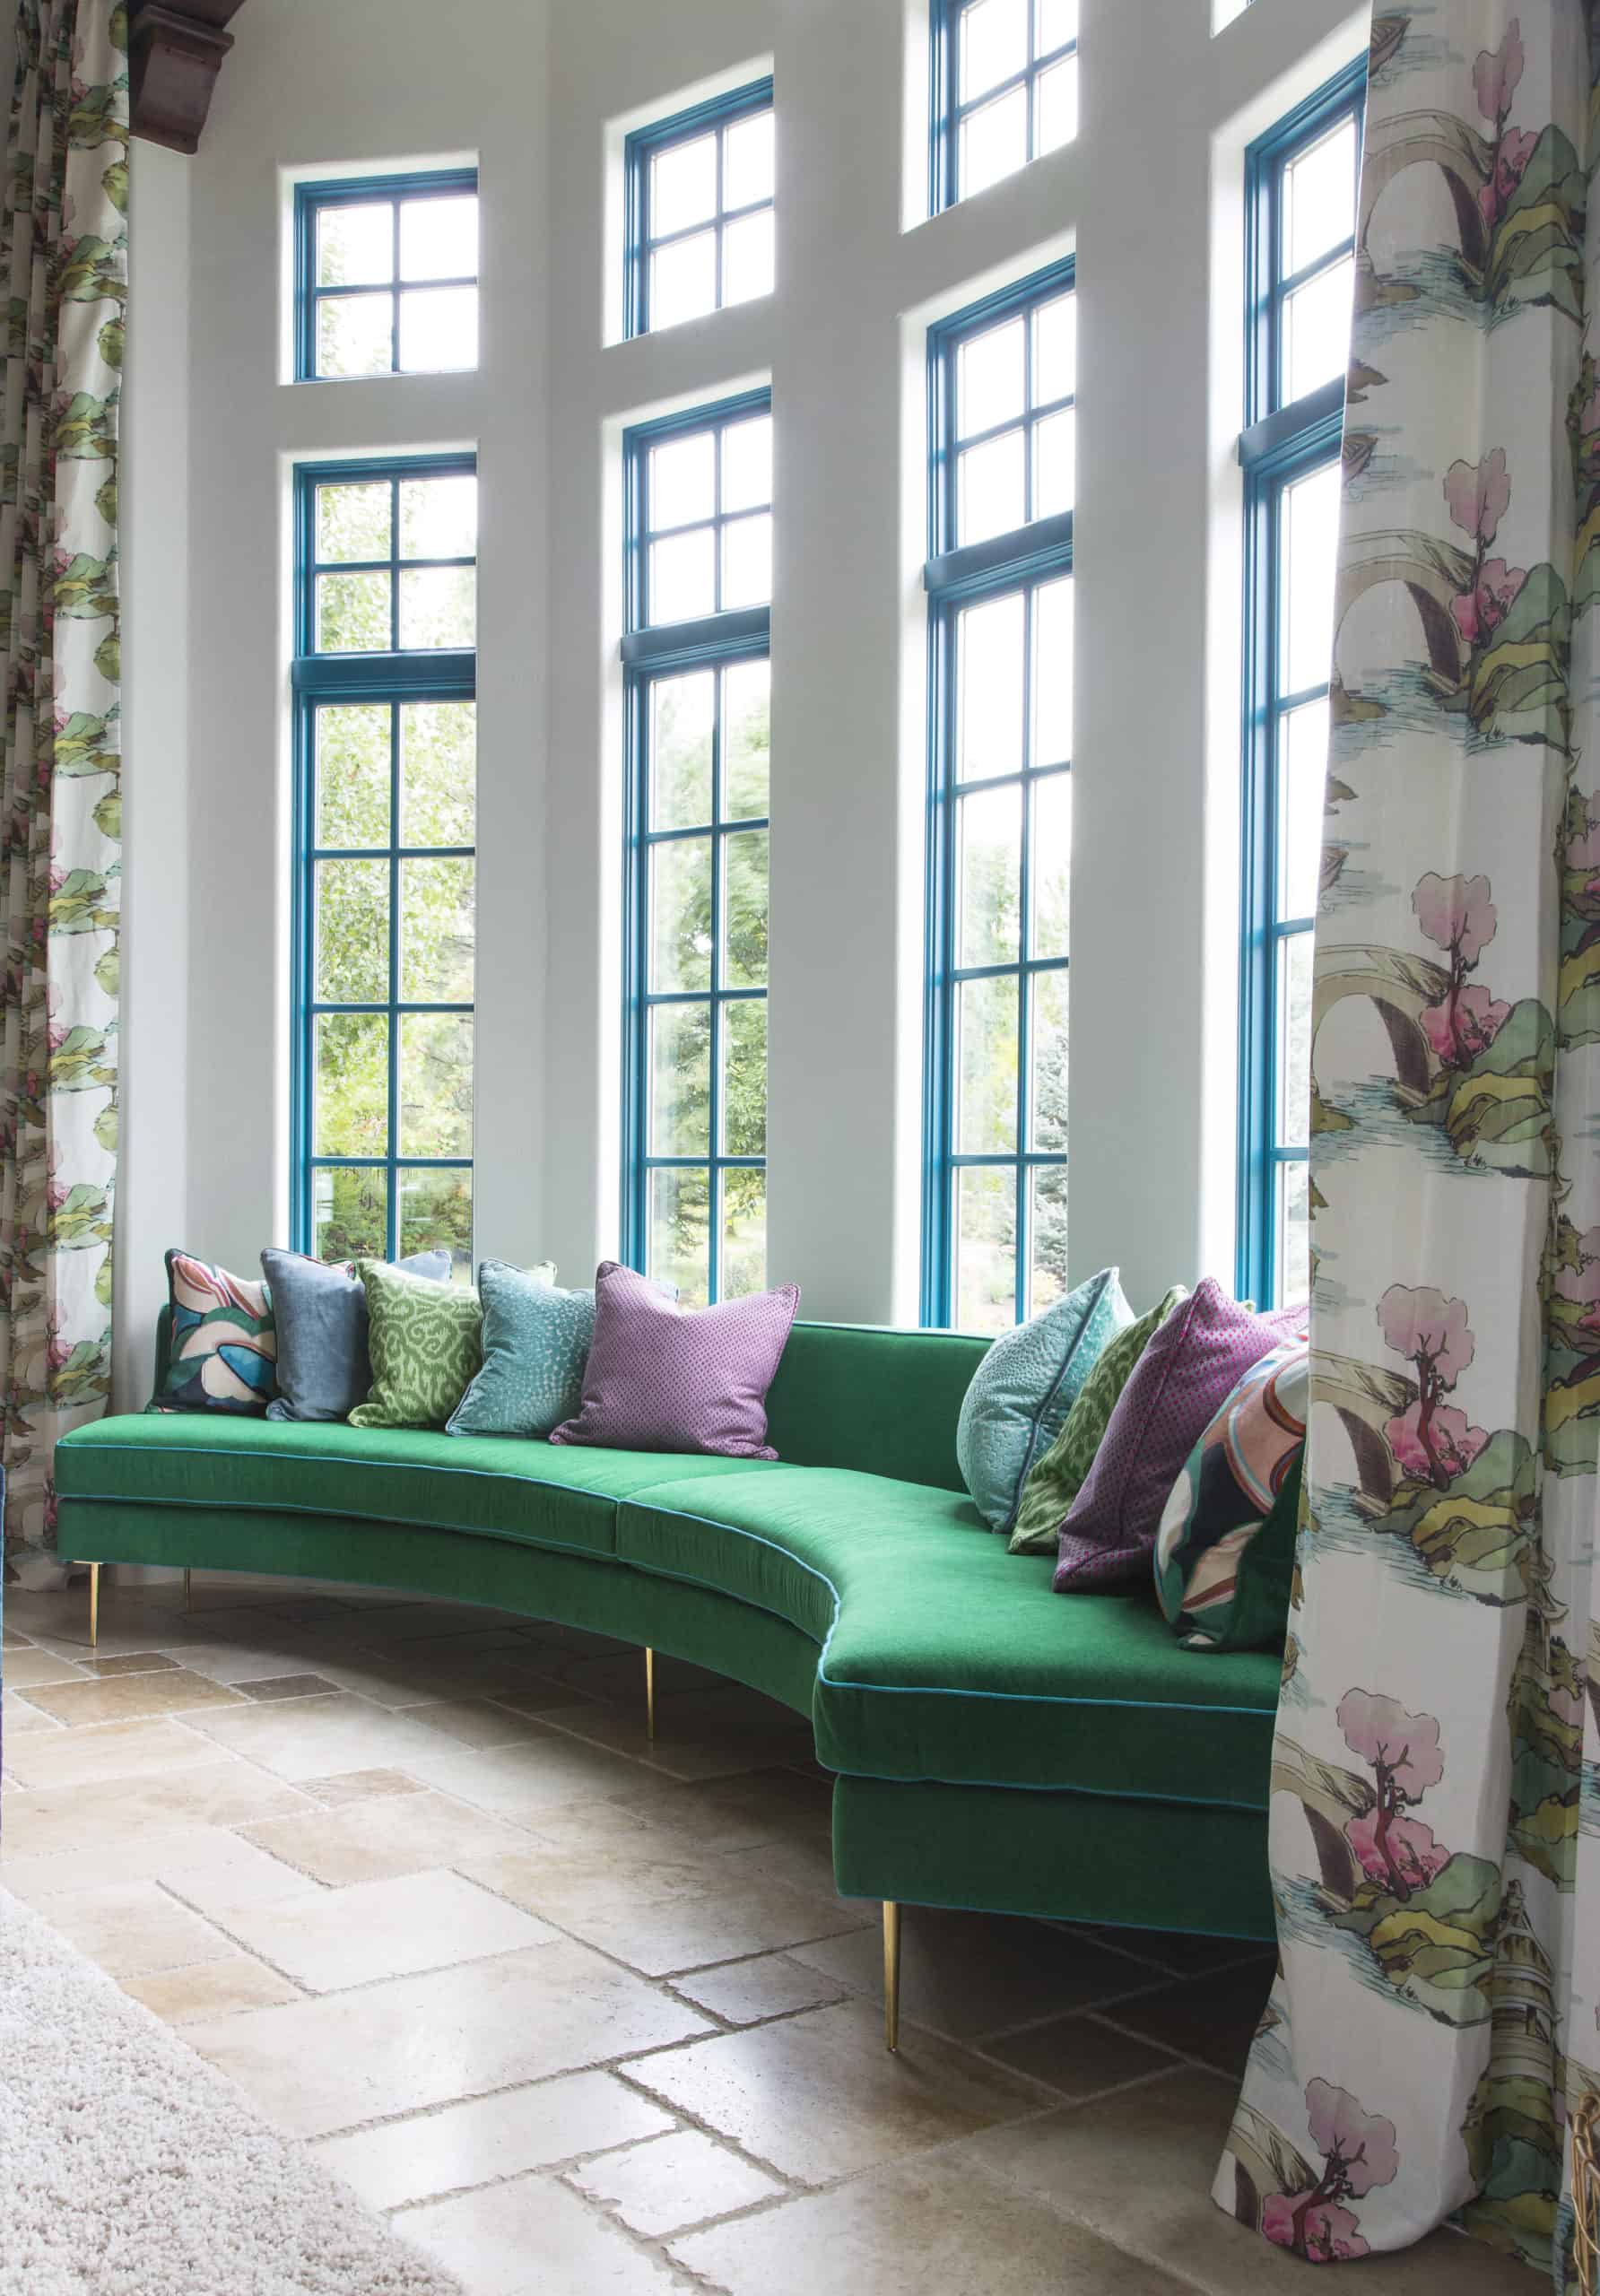 Large custom curved green sofa in bay window